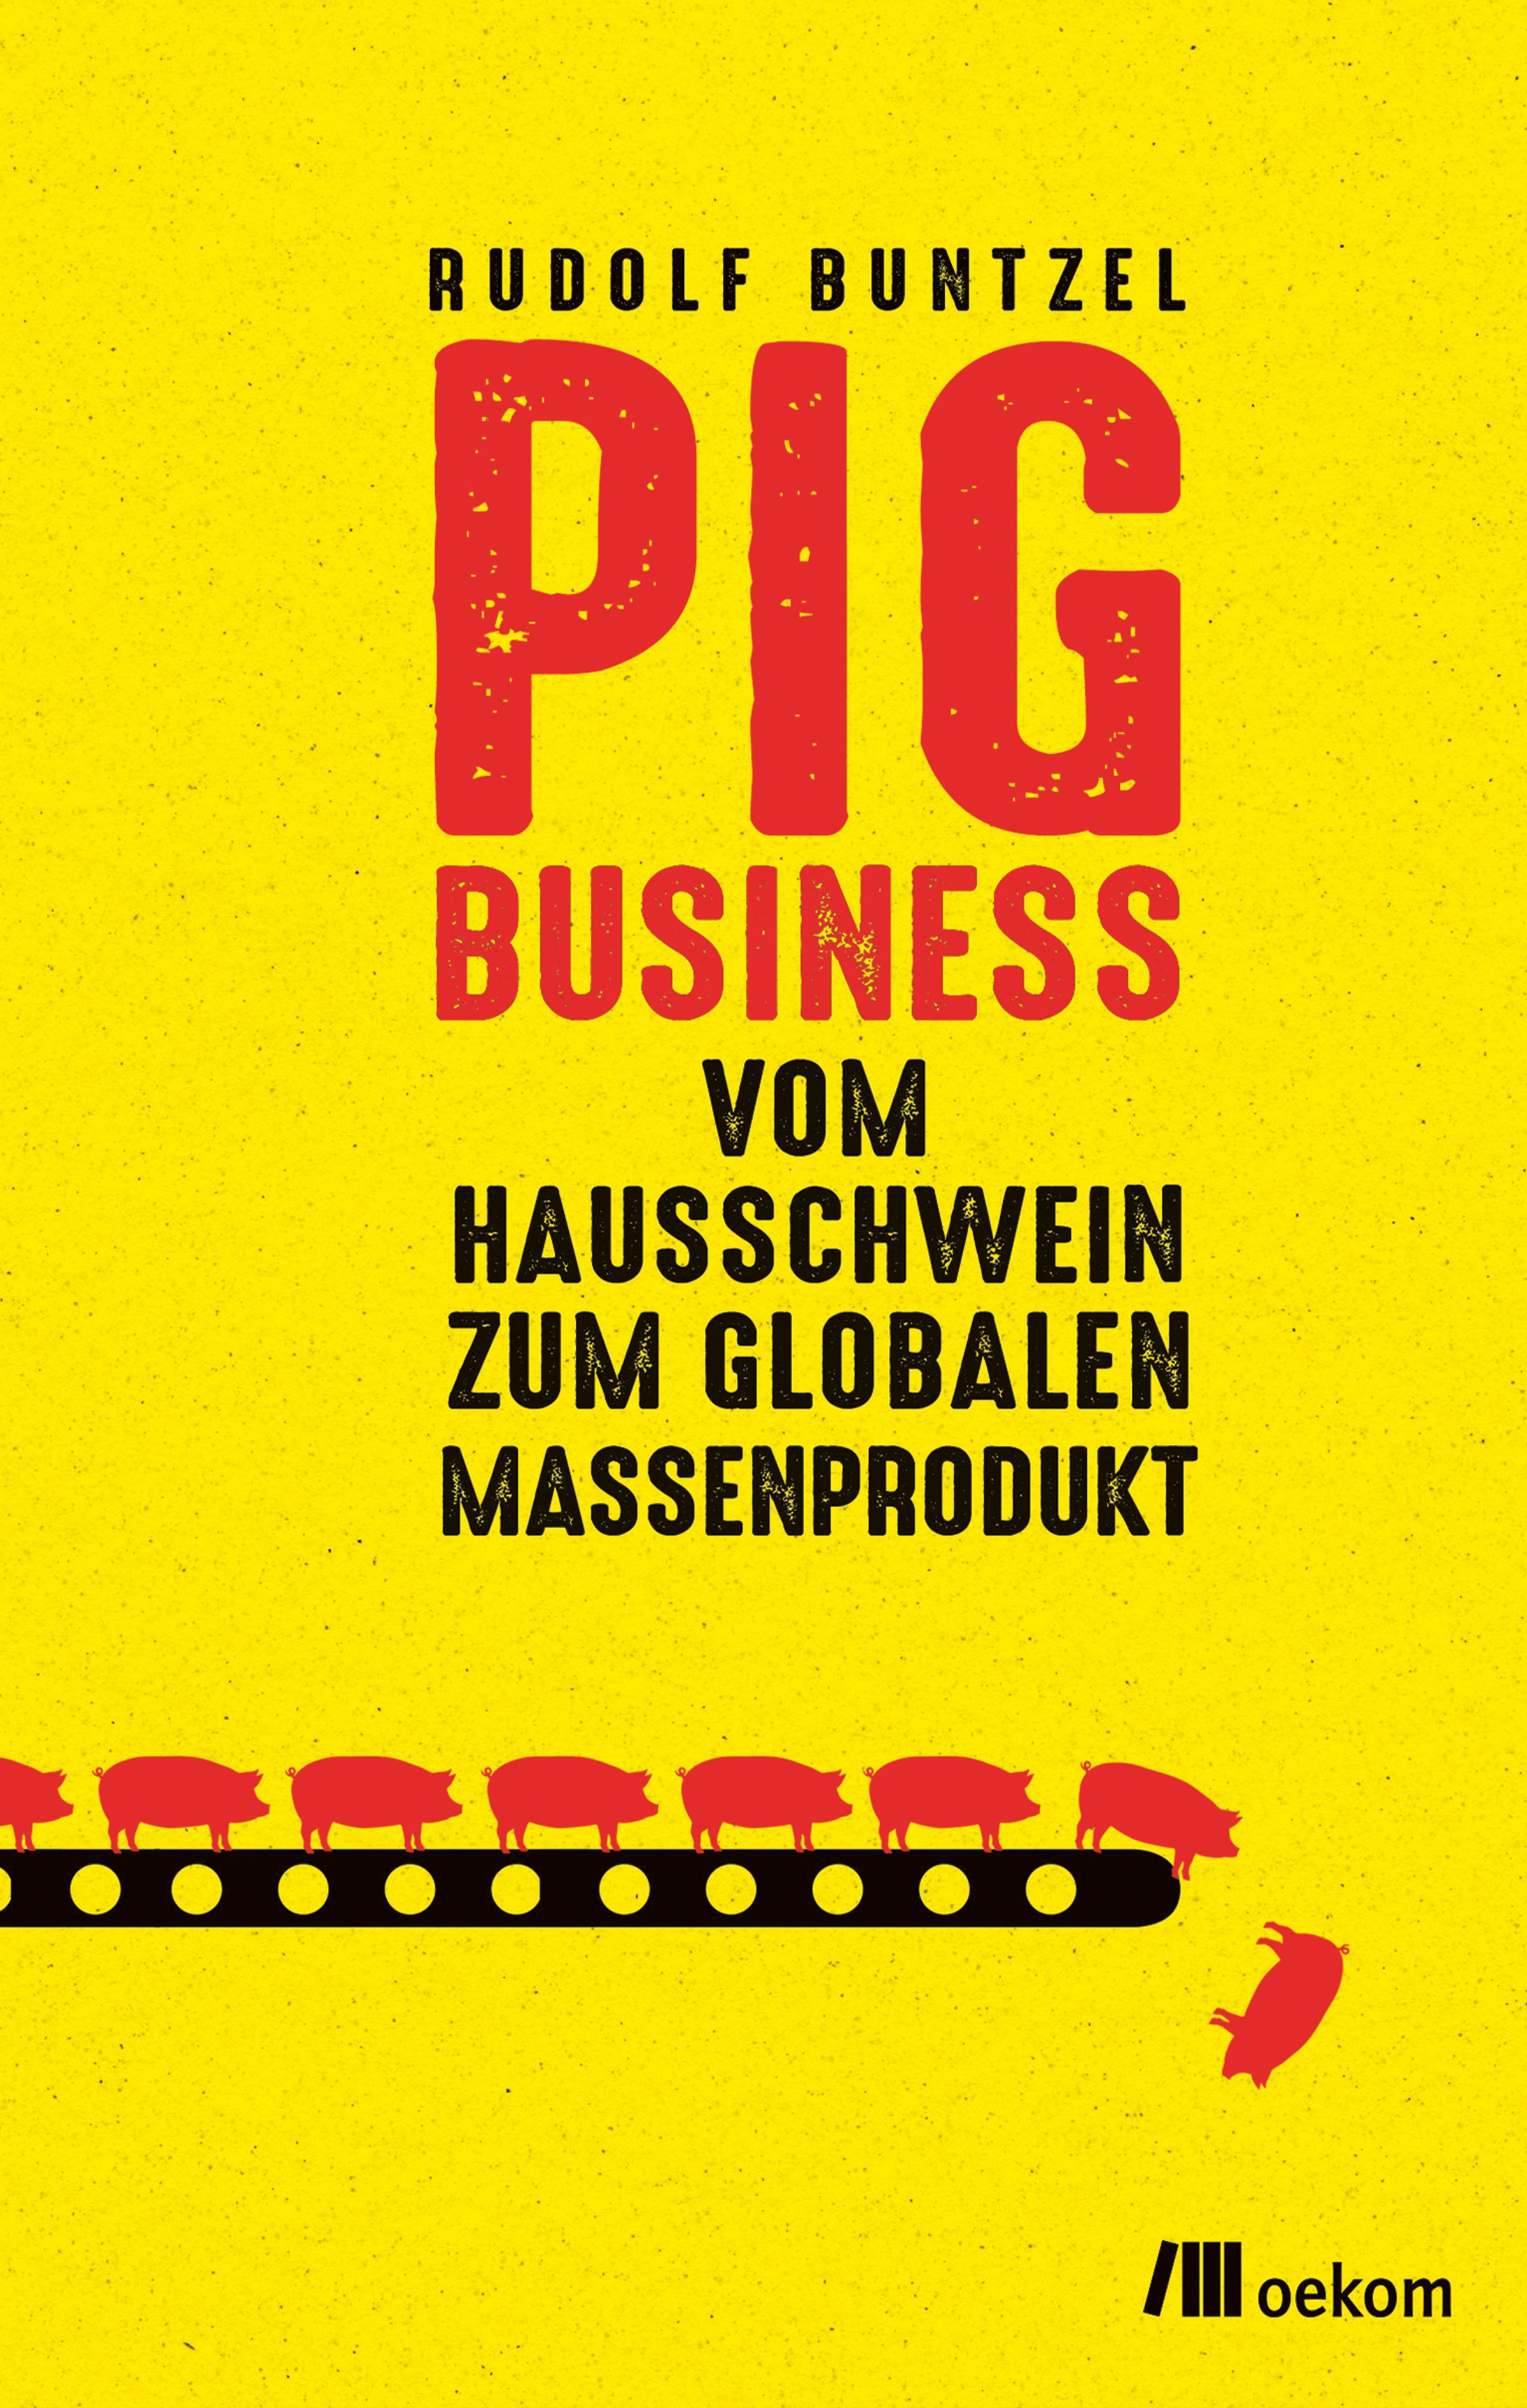 Pig Business